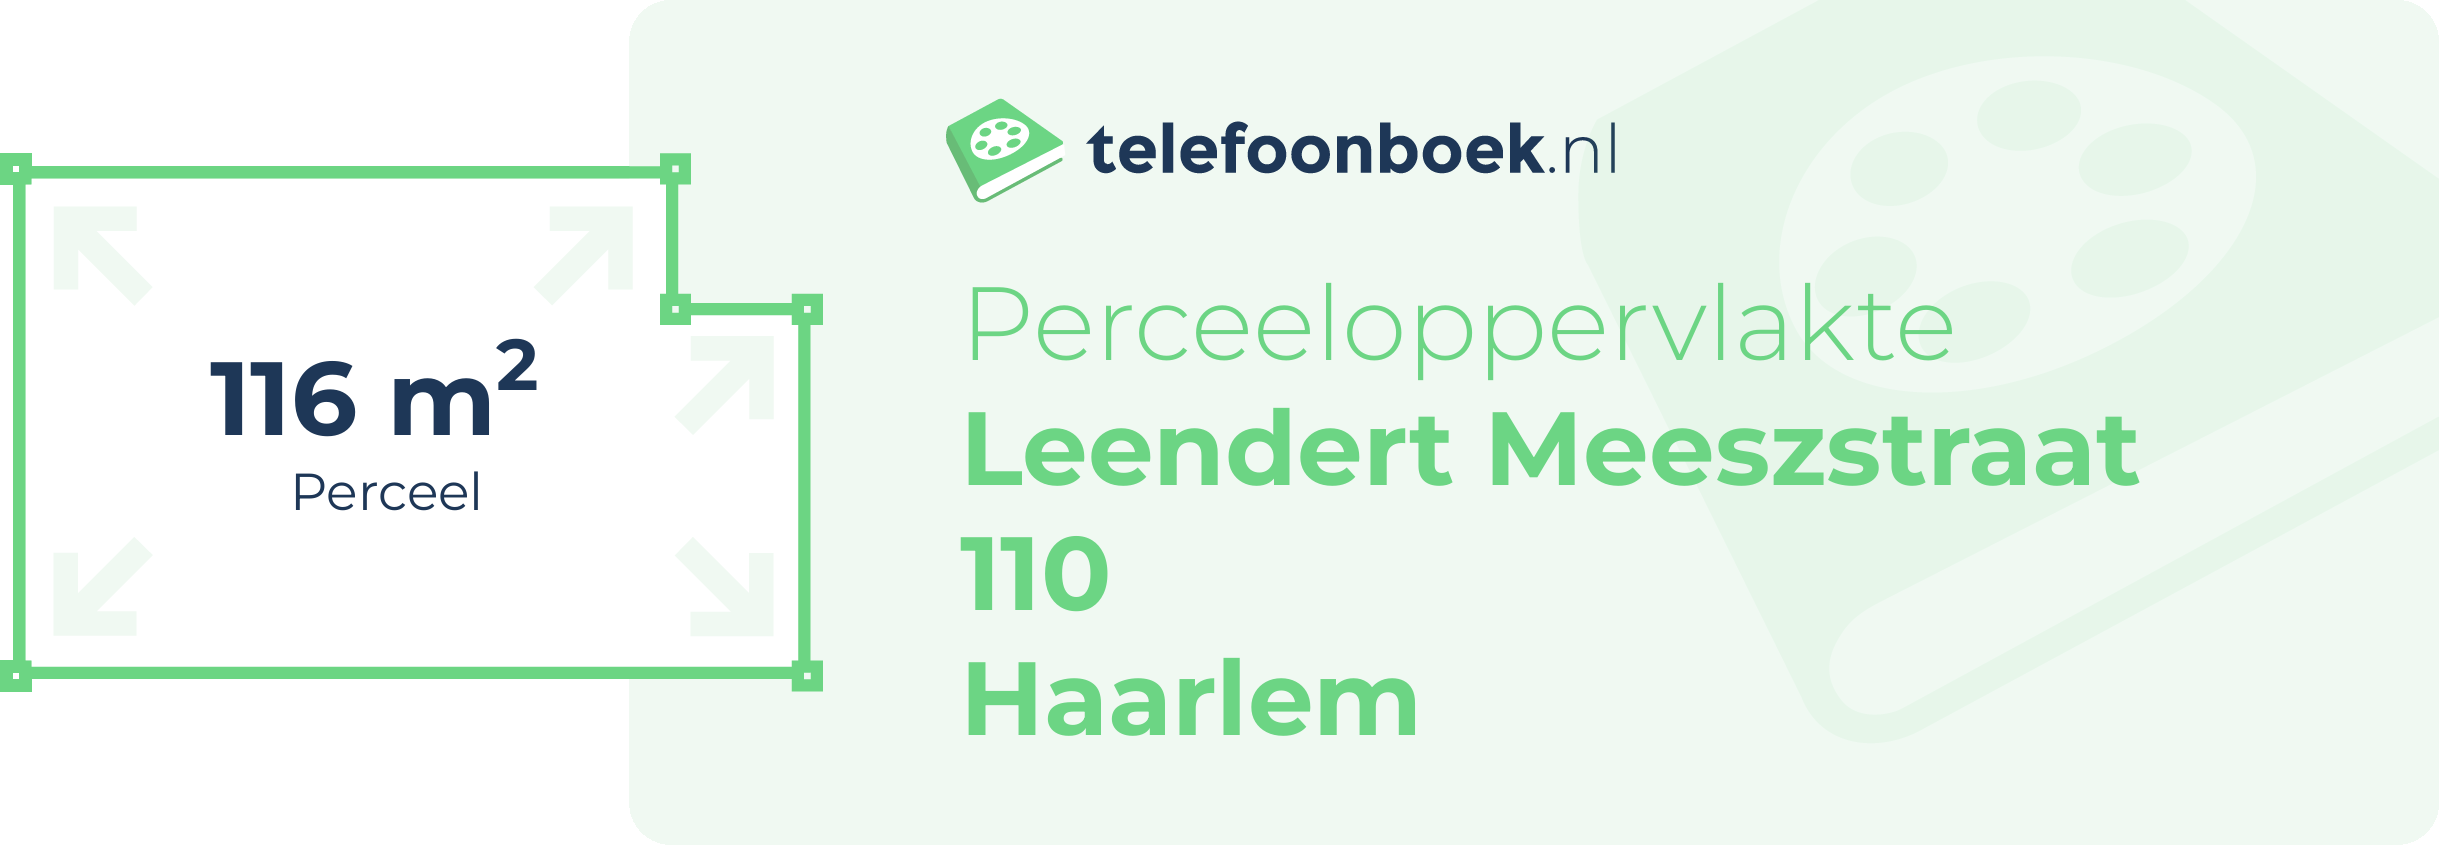 Perceeloppervlakte Leendert Meeszstraat 110 Haarlem